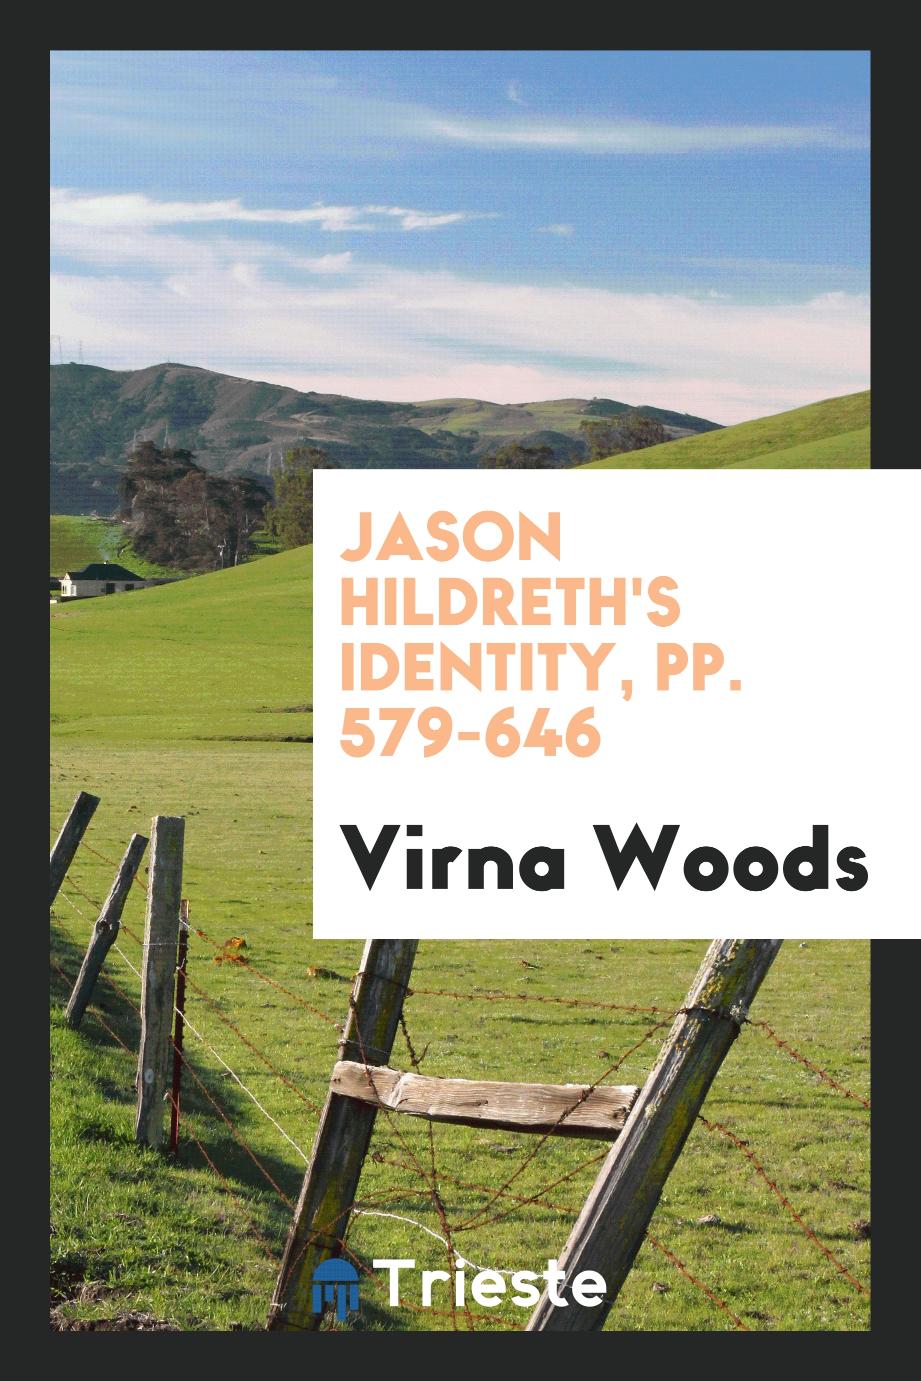 Jason Hildreth's Identity, pp. 579-646